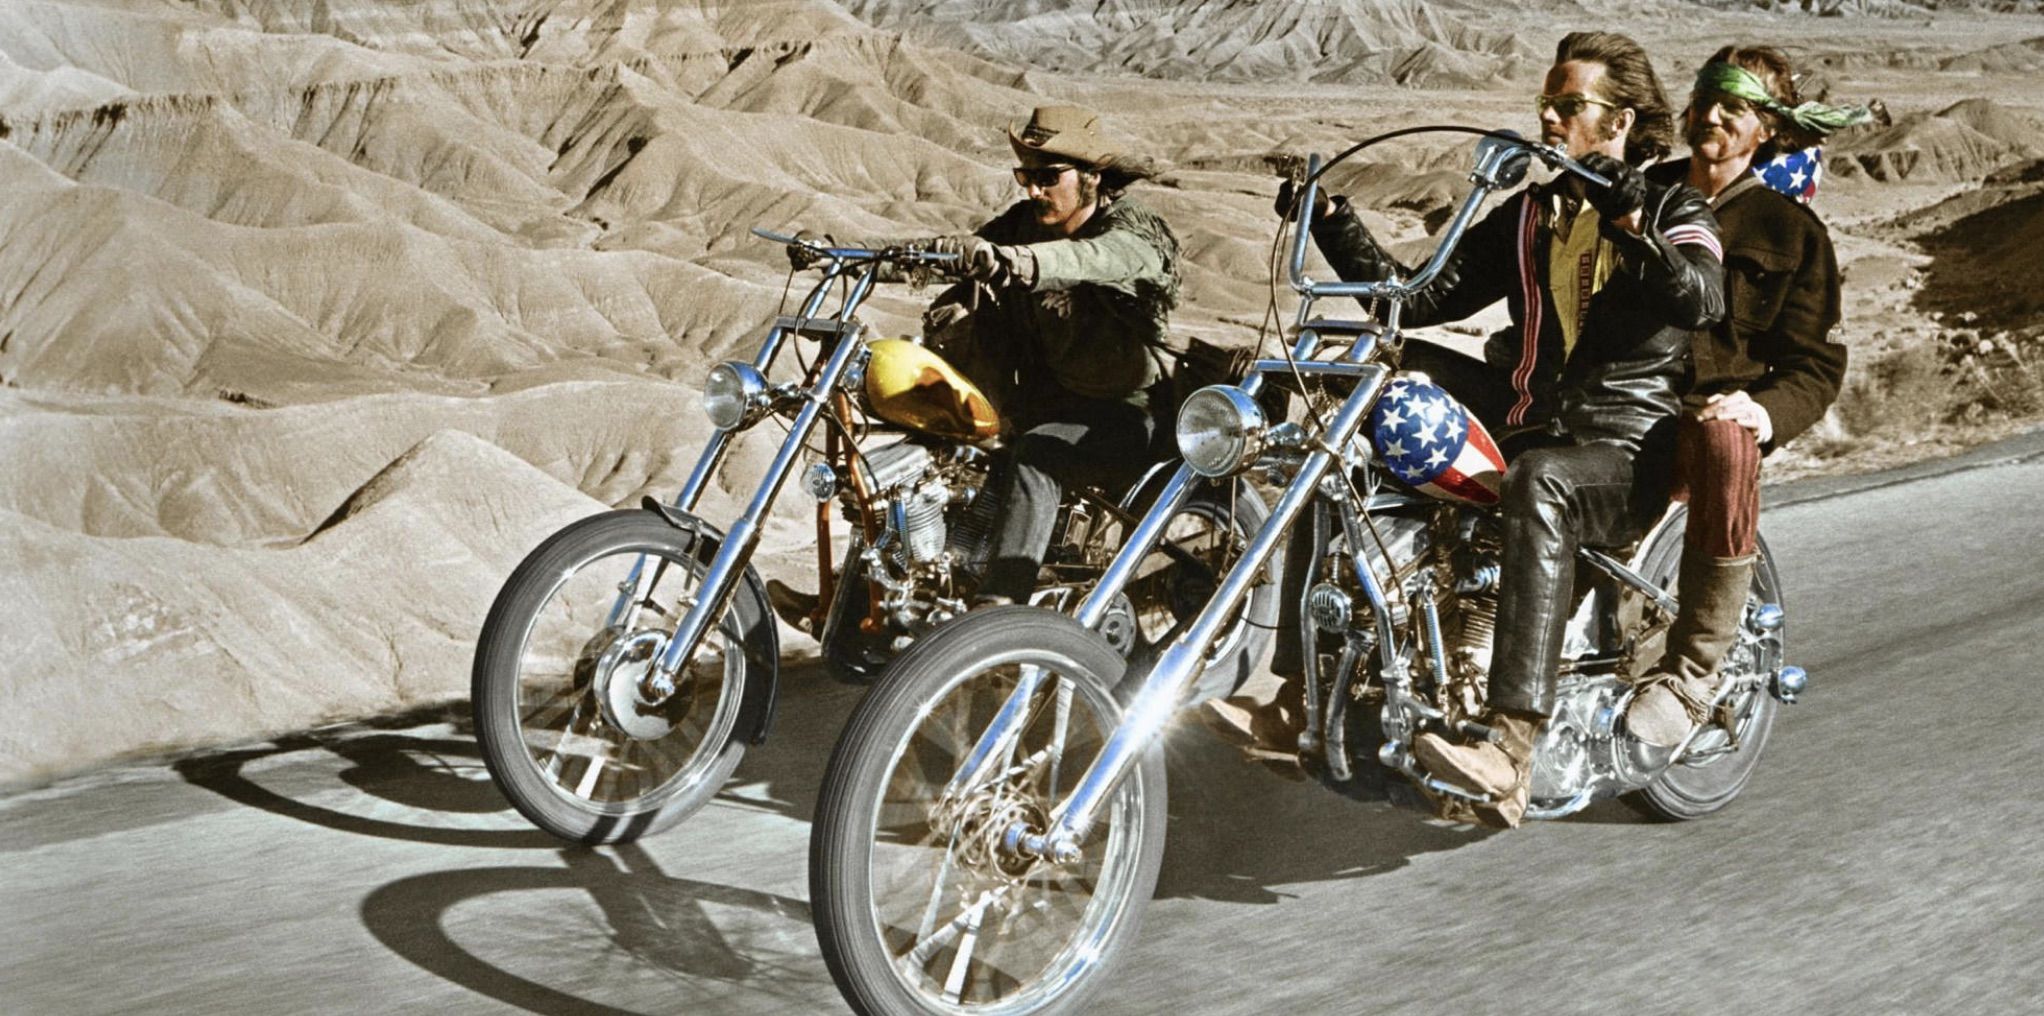 Easy Rider filme 50